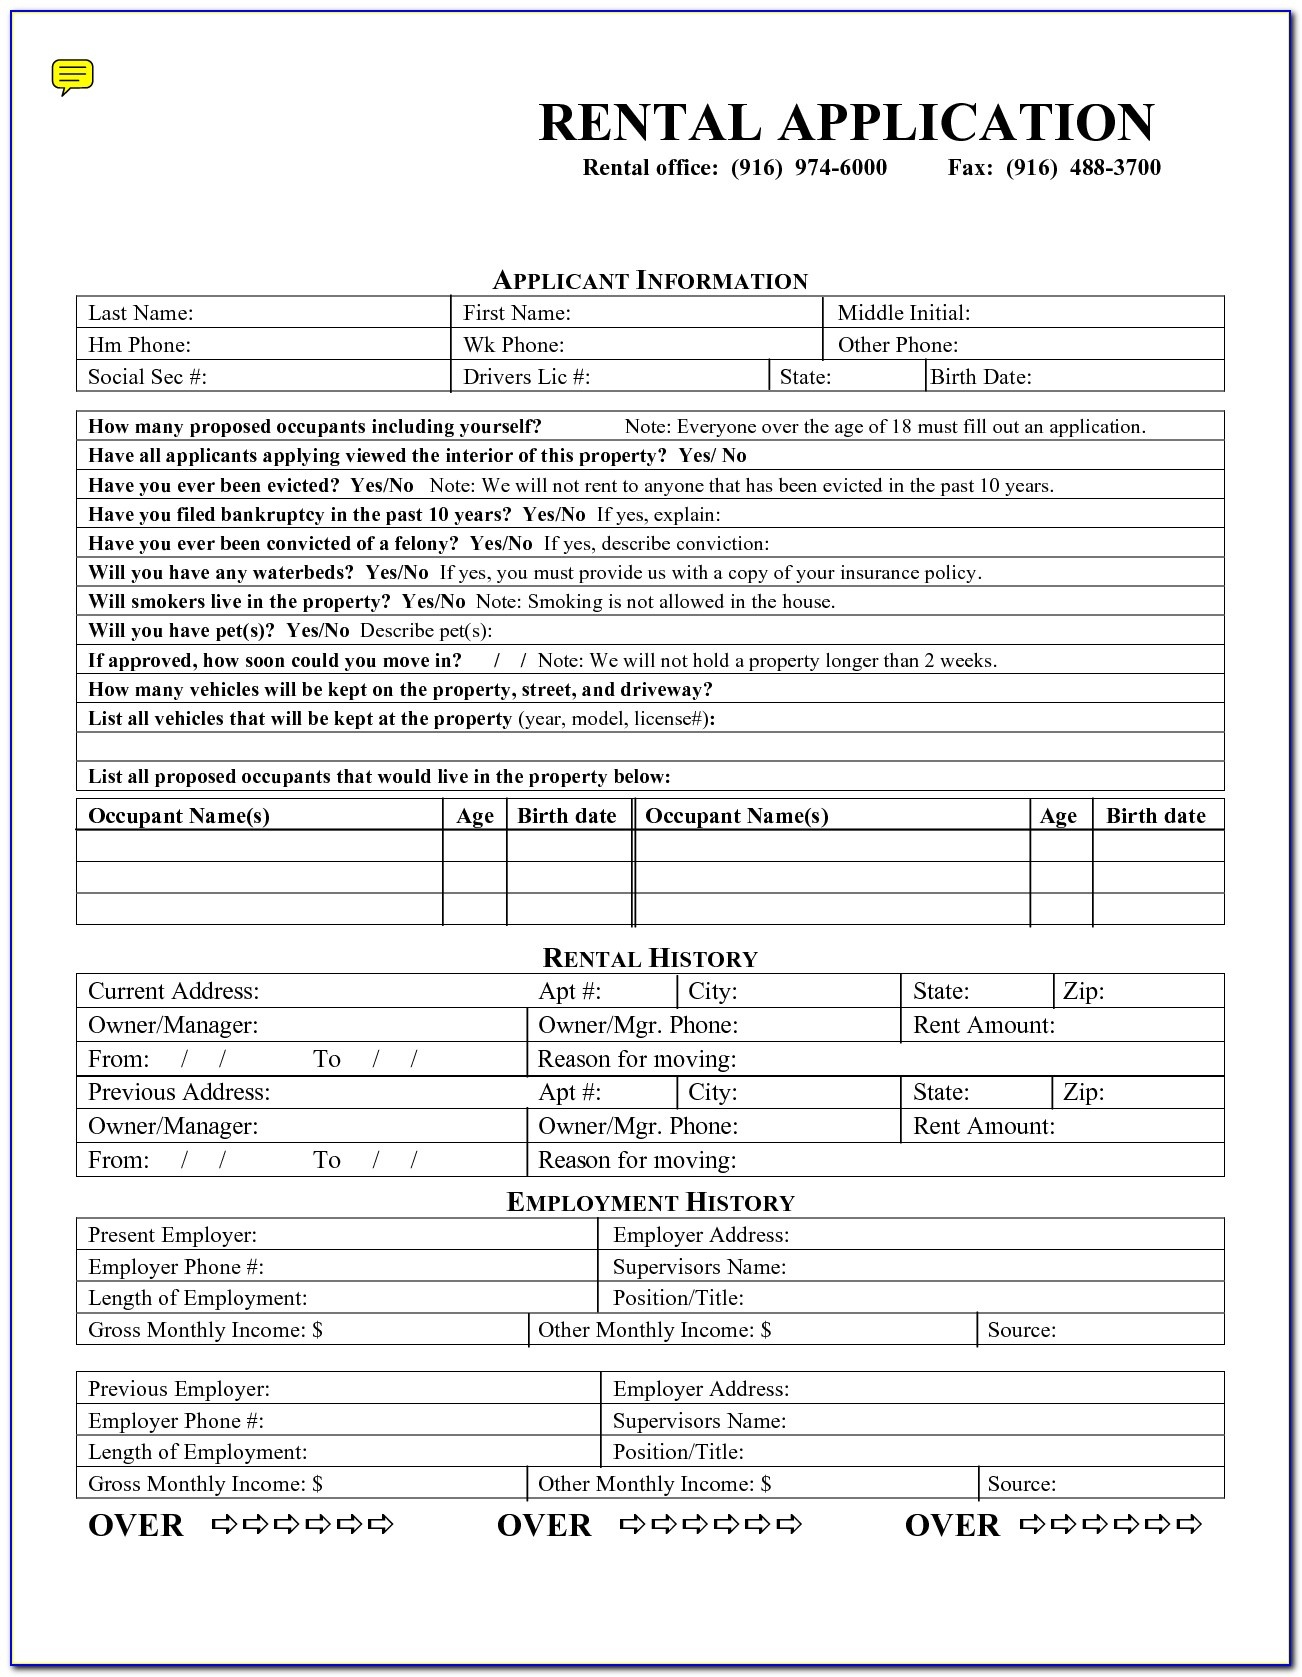 Rental Application Forms Free Printable - Form : Resume Examples - Free Printable Forms